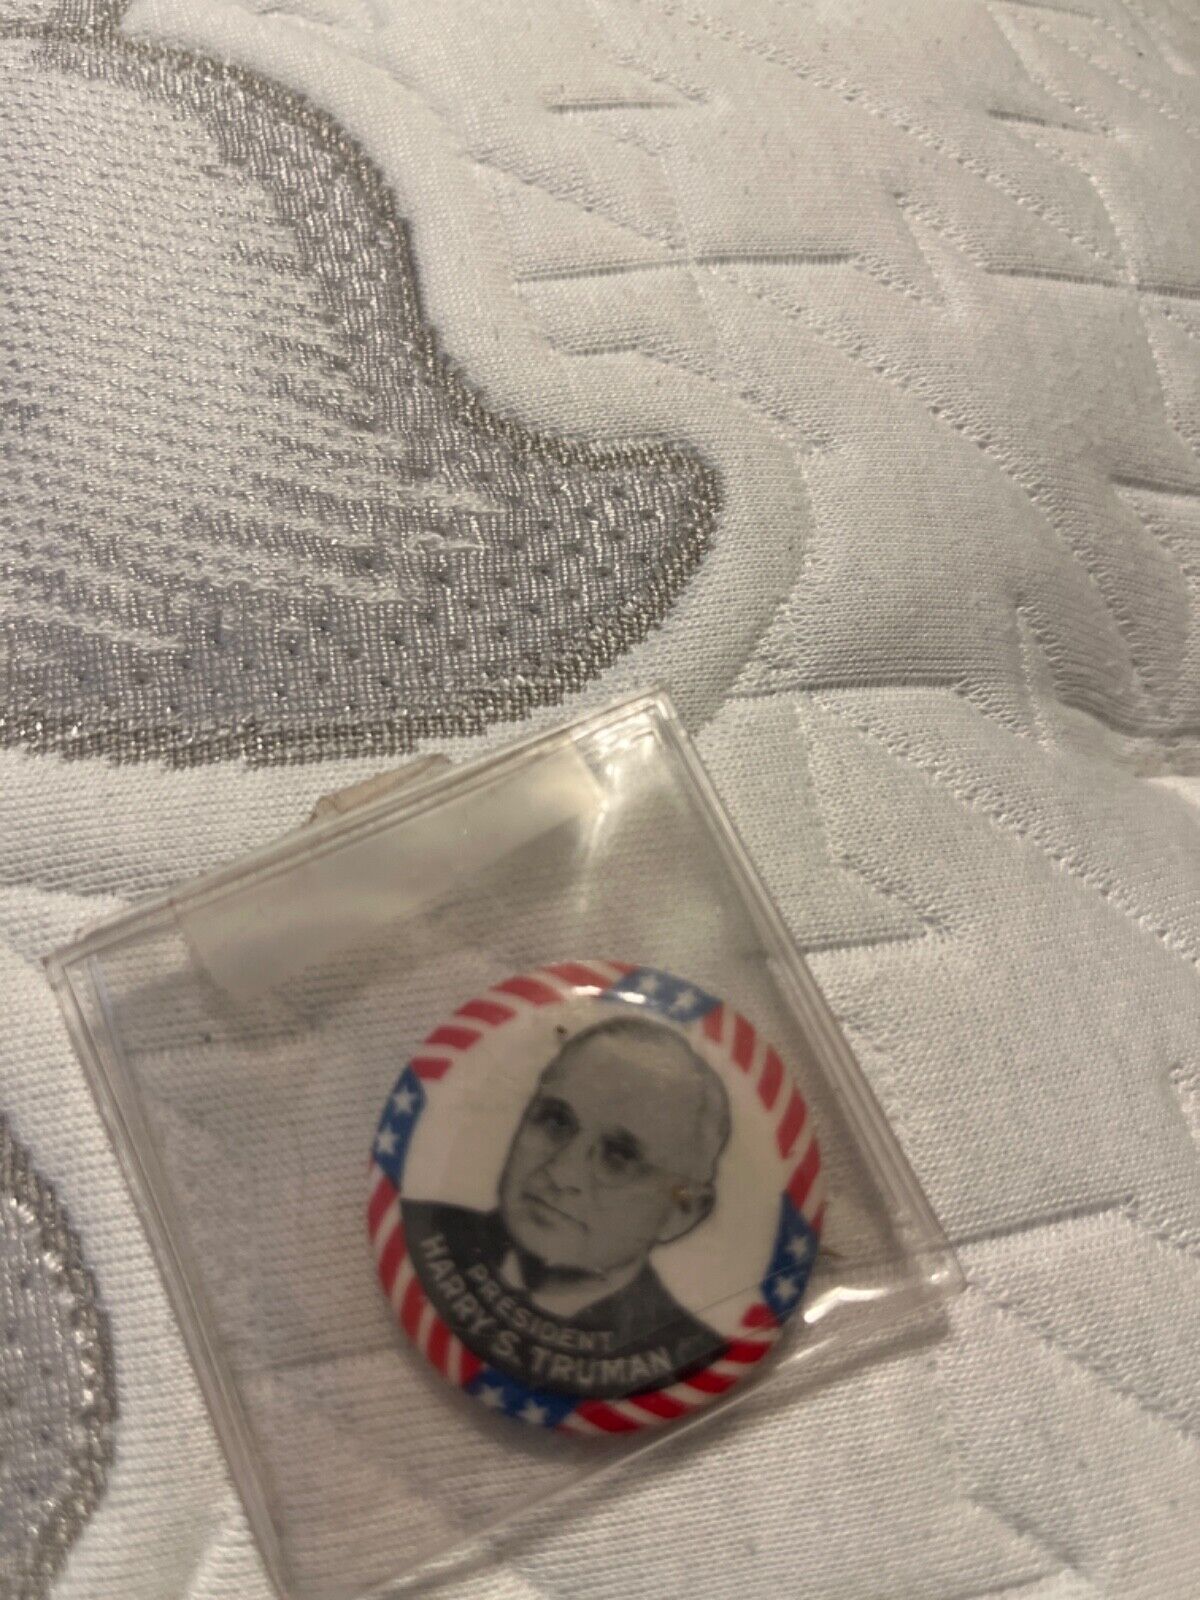 1948 HARRY S. TRUMAN campaign pin pinback button political president election